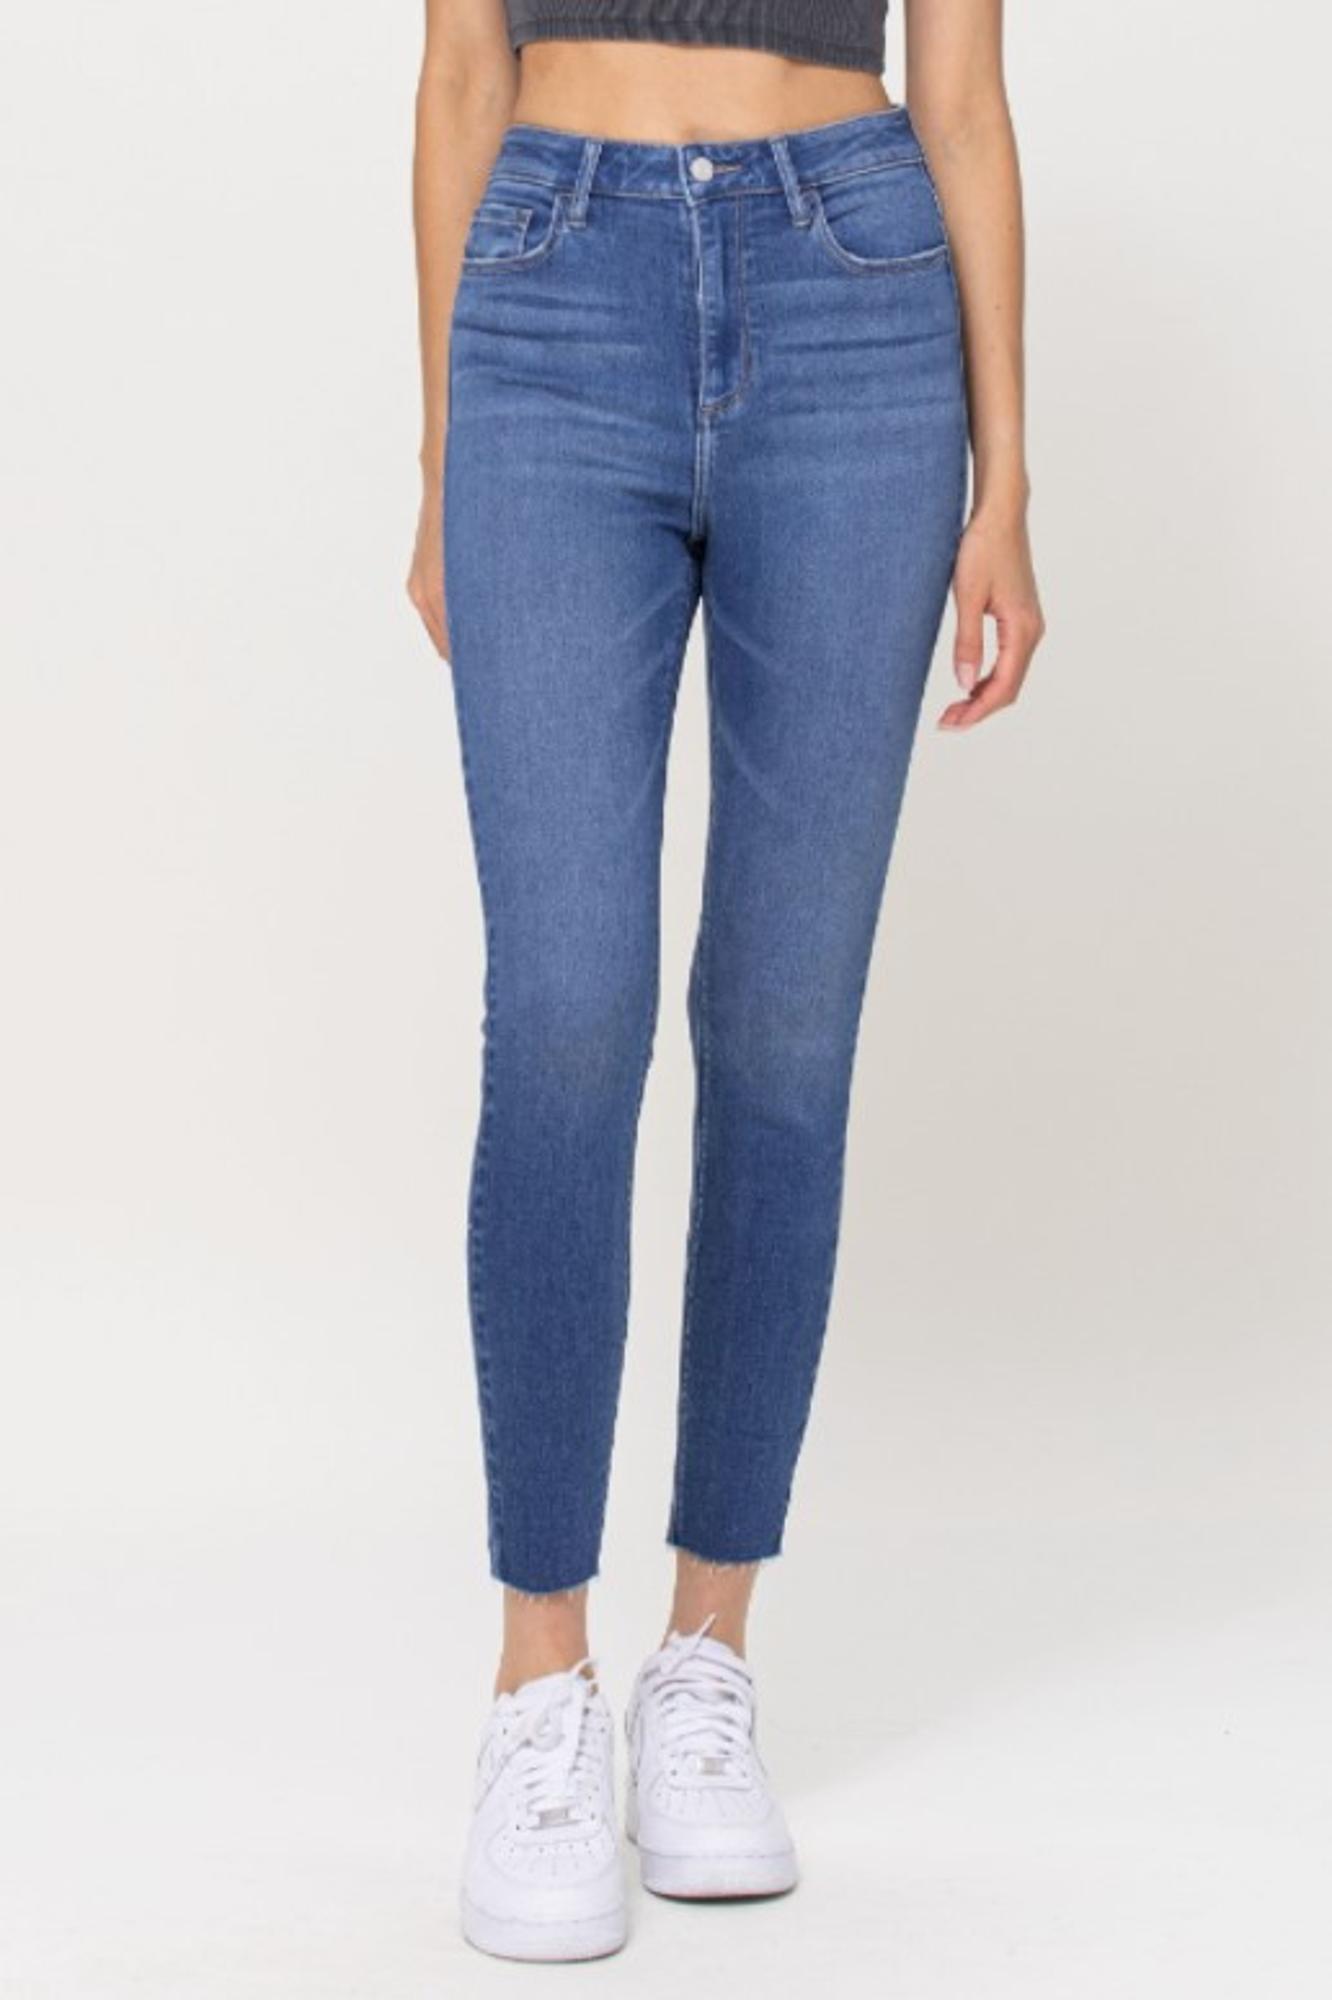 High Rise Crop Skinny Jeans